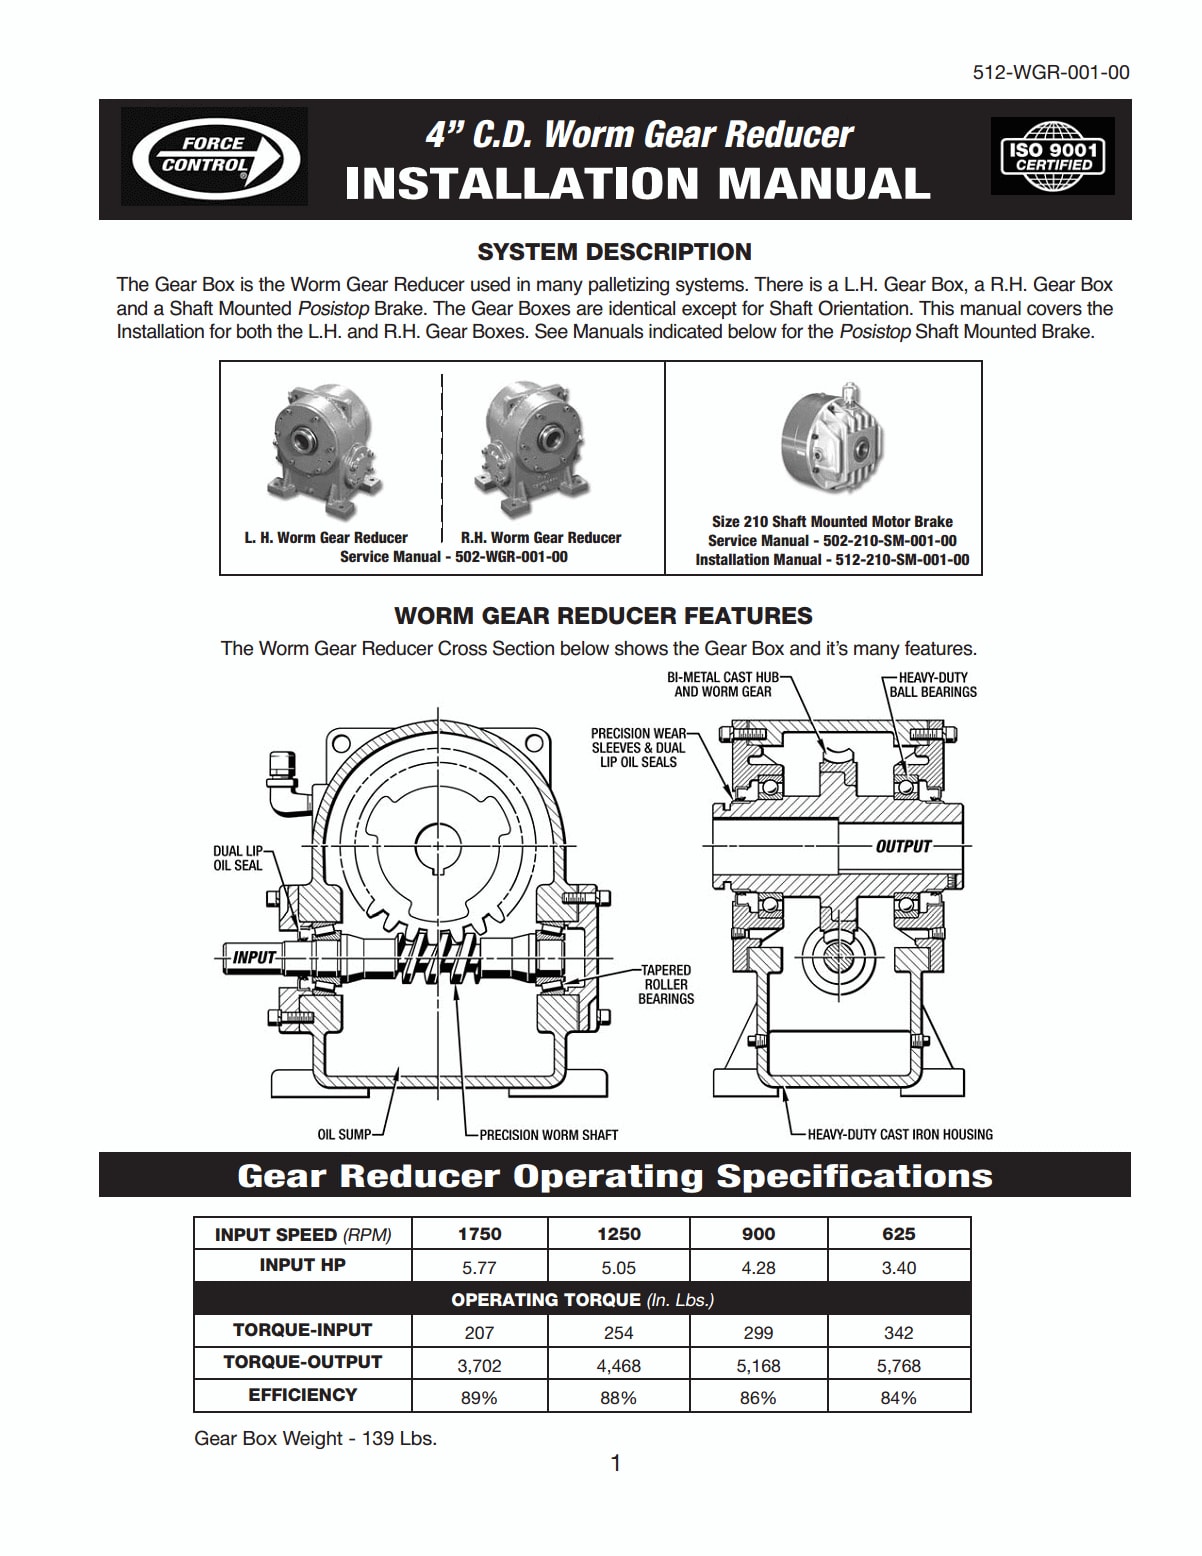 Worm Gear Reduce Installation Manual